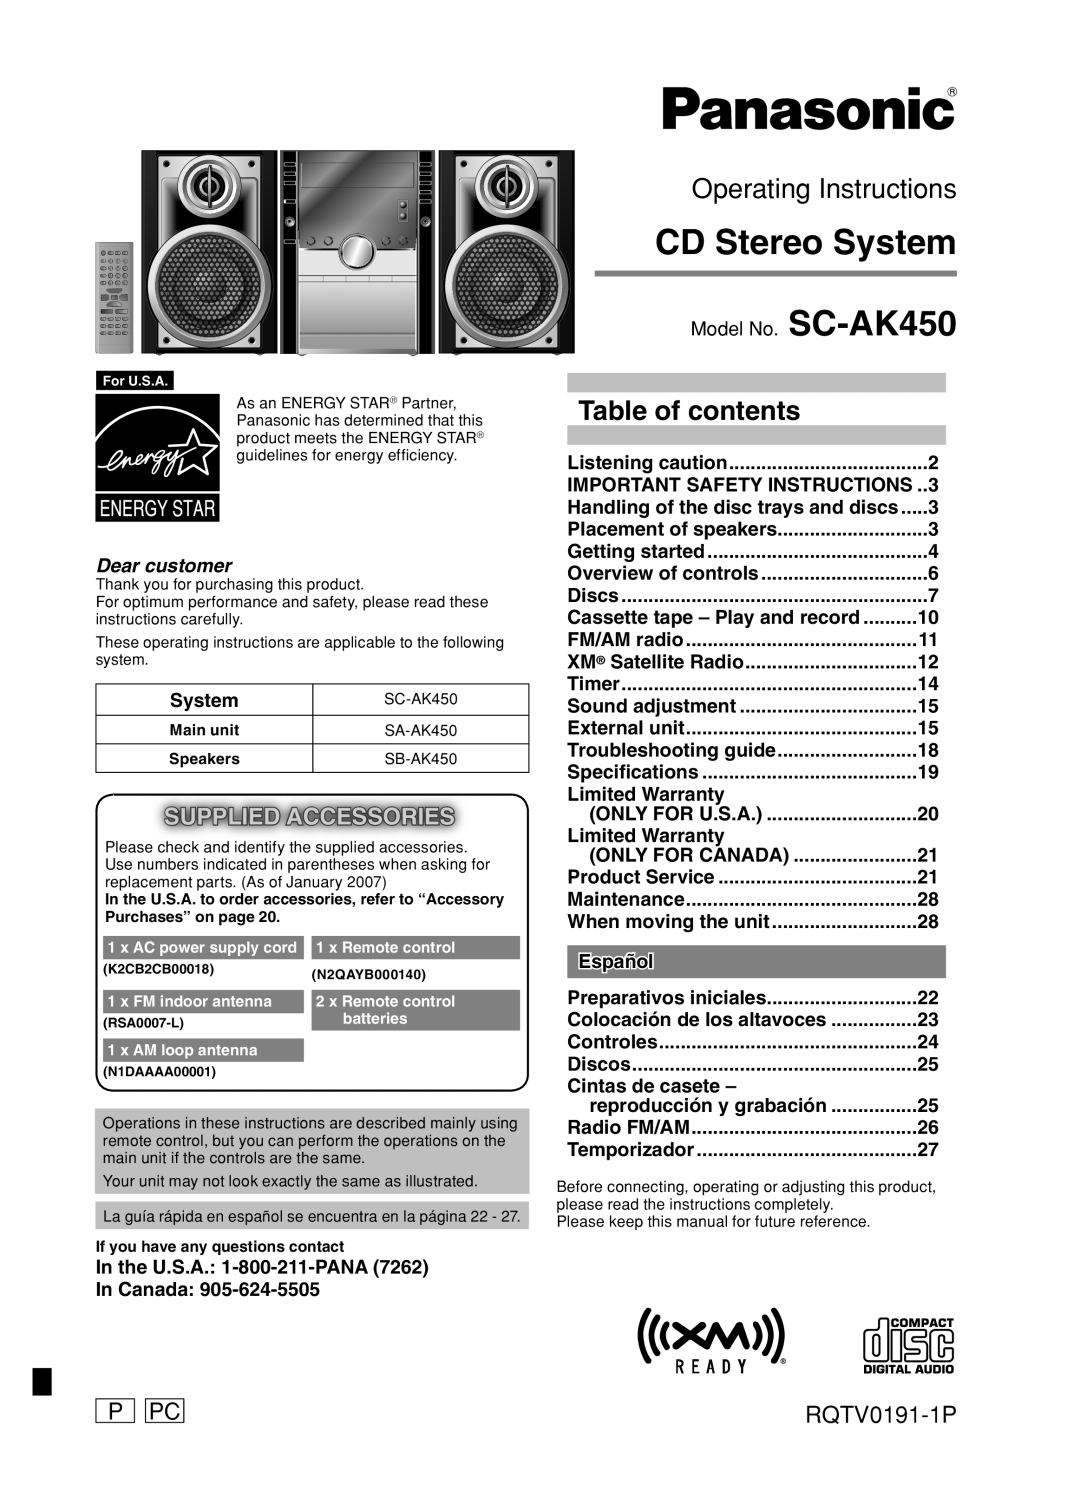 Panasonic SC-AK250 important safety instructions RQTV0199-2M, Important Safety Instructions, CD Stereo System 